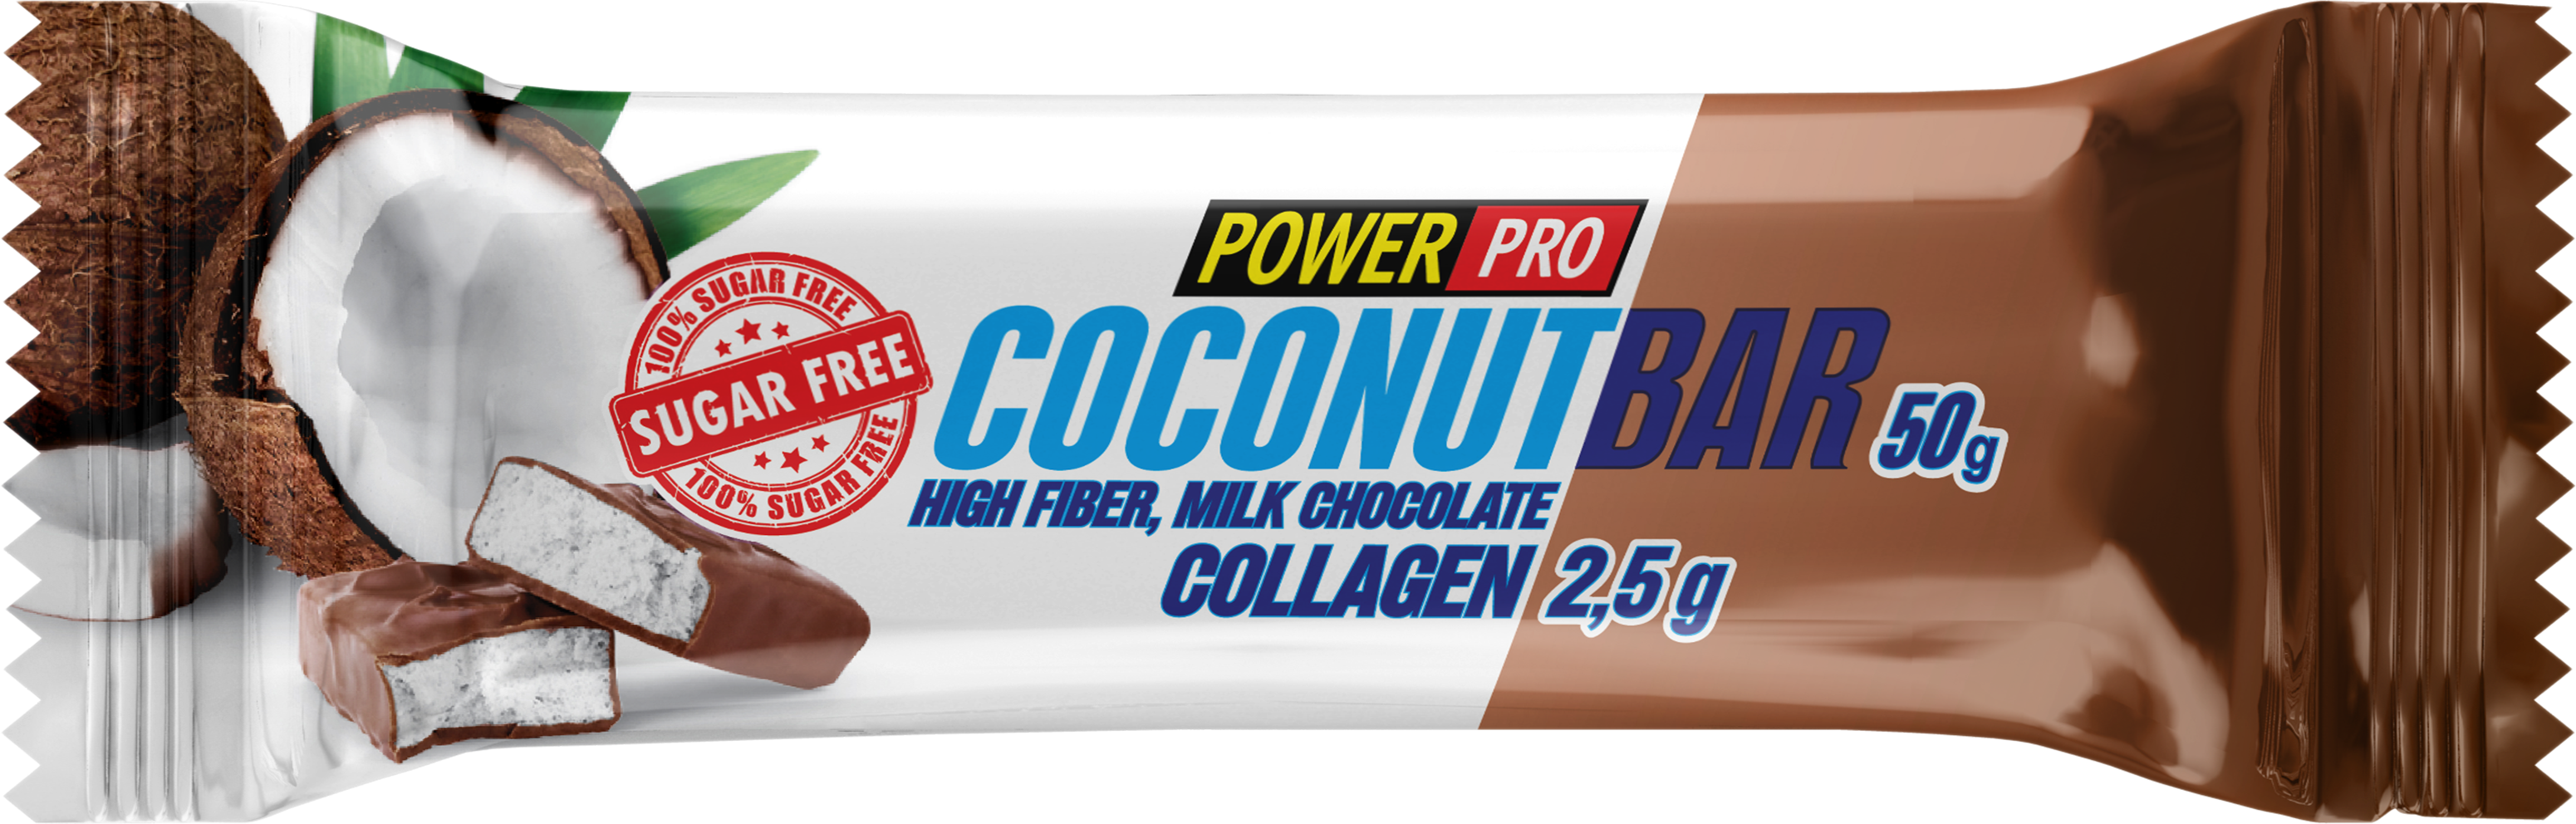 Power Pro Coconut Bar 50 г. Power Pro батончики. Power Pro Coconut Bar батончики. Батончик с кокосом Coconut с шоколадом. Батончик с кокосом без сахара